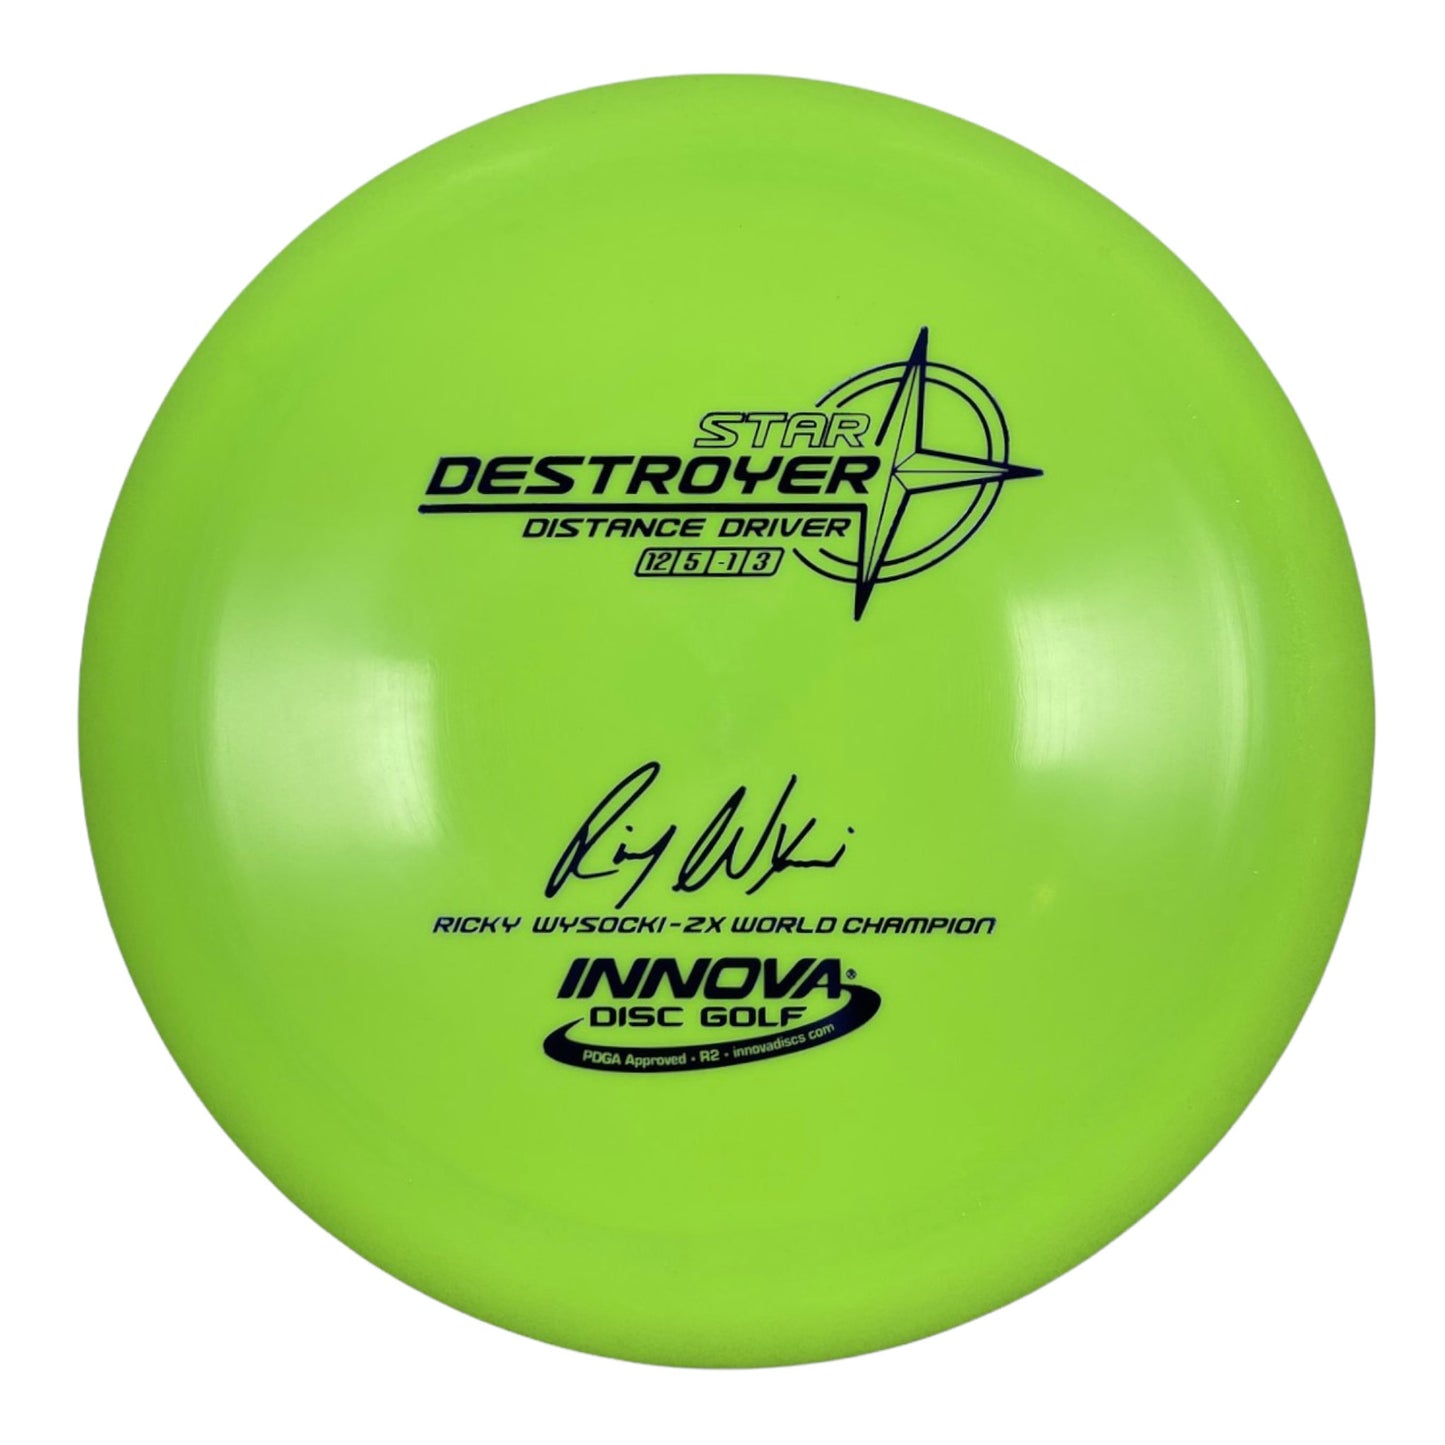 Innova Champion Discs Destroyer | Star | Green/Blue 170g (Ricky Wysocki) Disc Golf